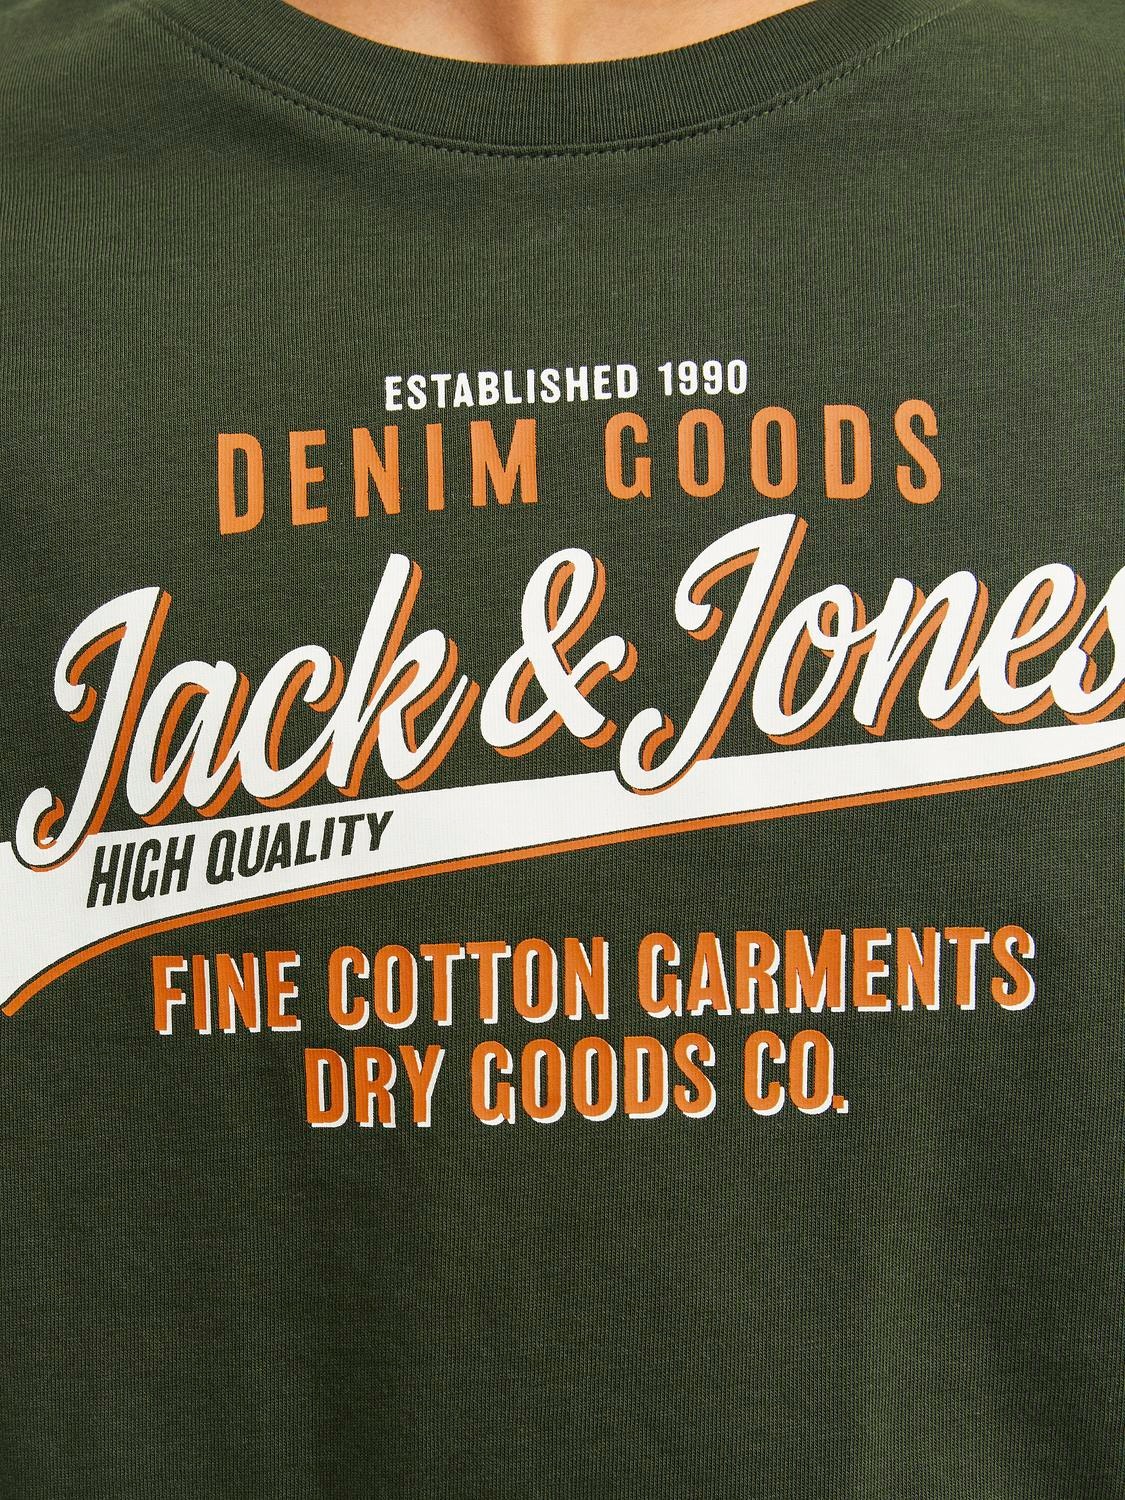 Jack & Jones Καλοκαιρινό μπλουζάκι -Kombu Green - 12258882